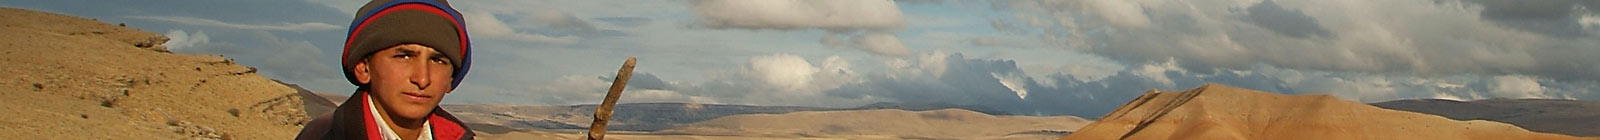 Turkey, shepherd Malatya, mountains, clouds, Banner